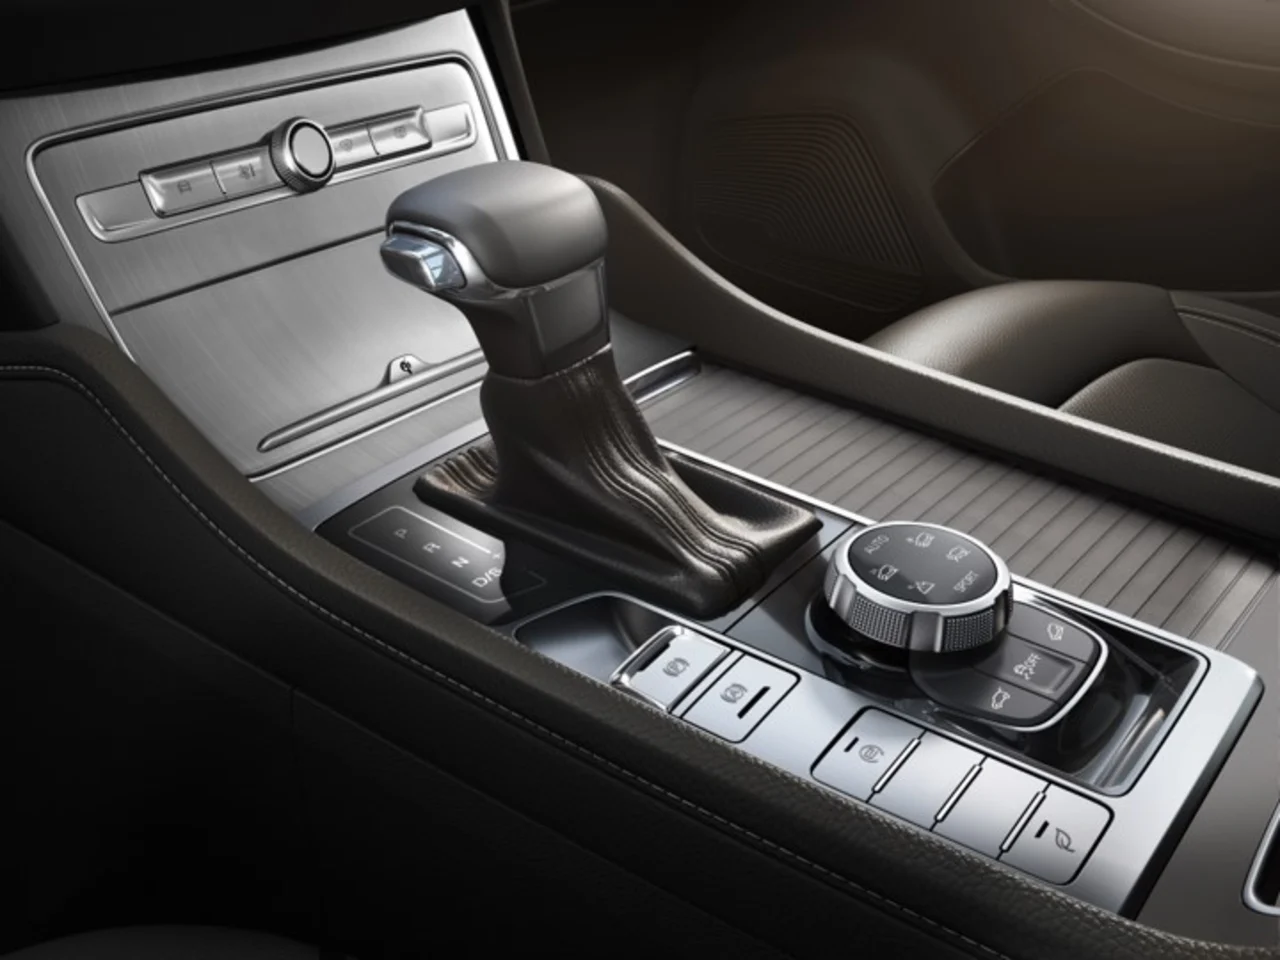 MG RX8 interior - Gear